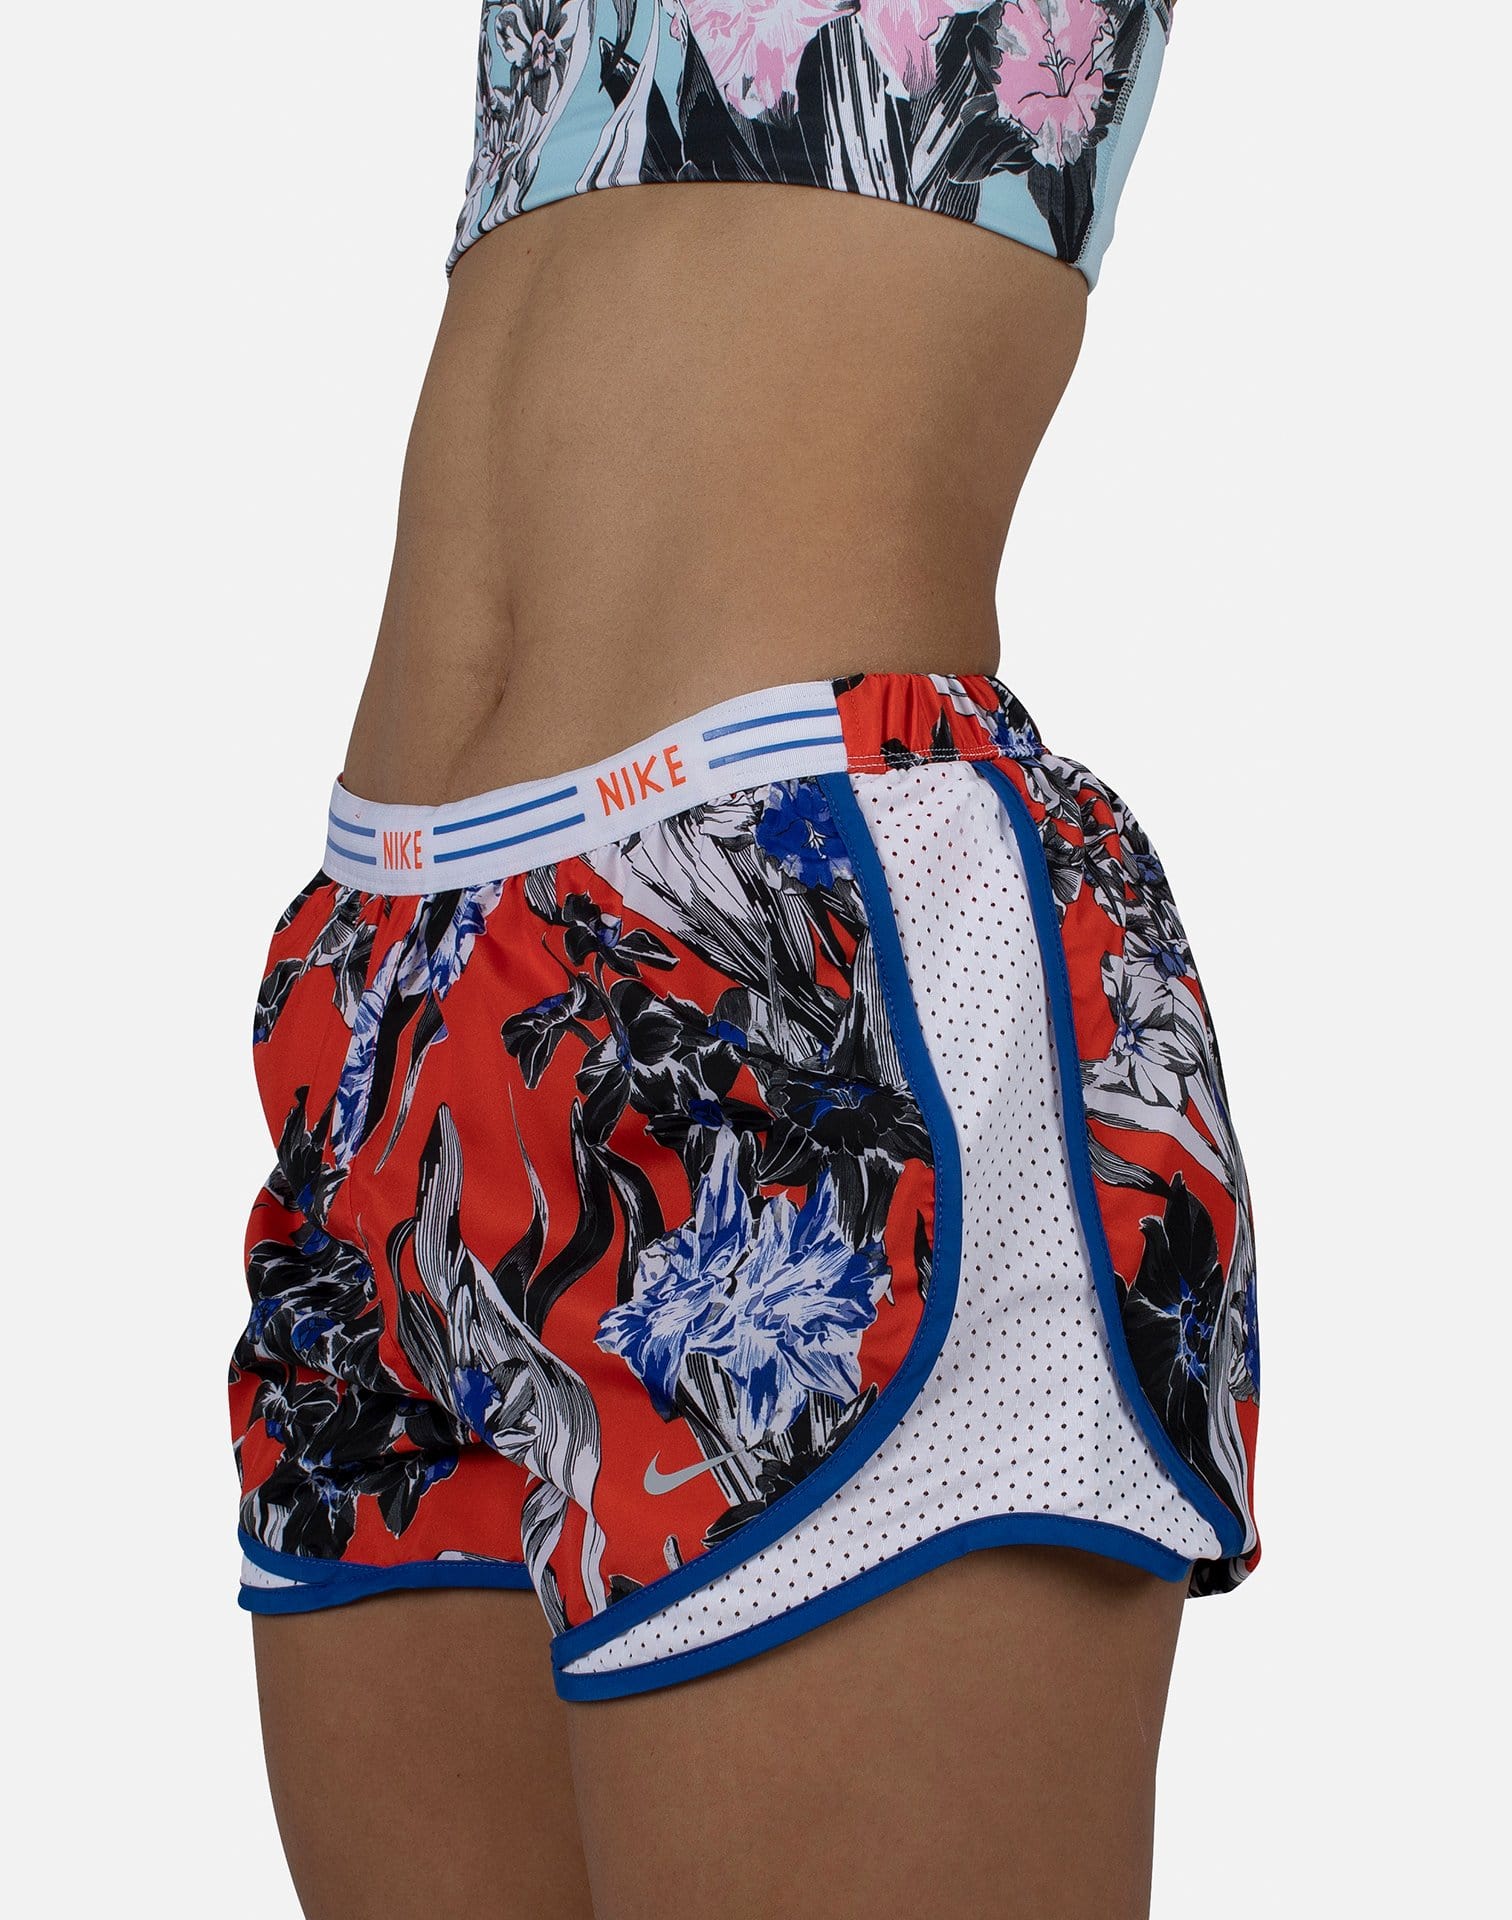 Nike Women's Tempo Hyper Femme Floral Shorts